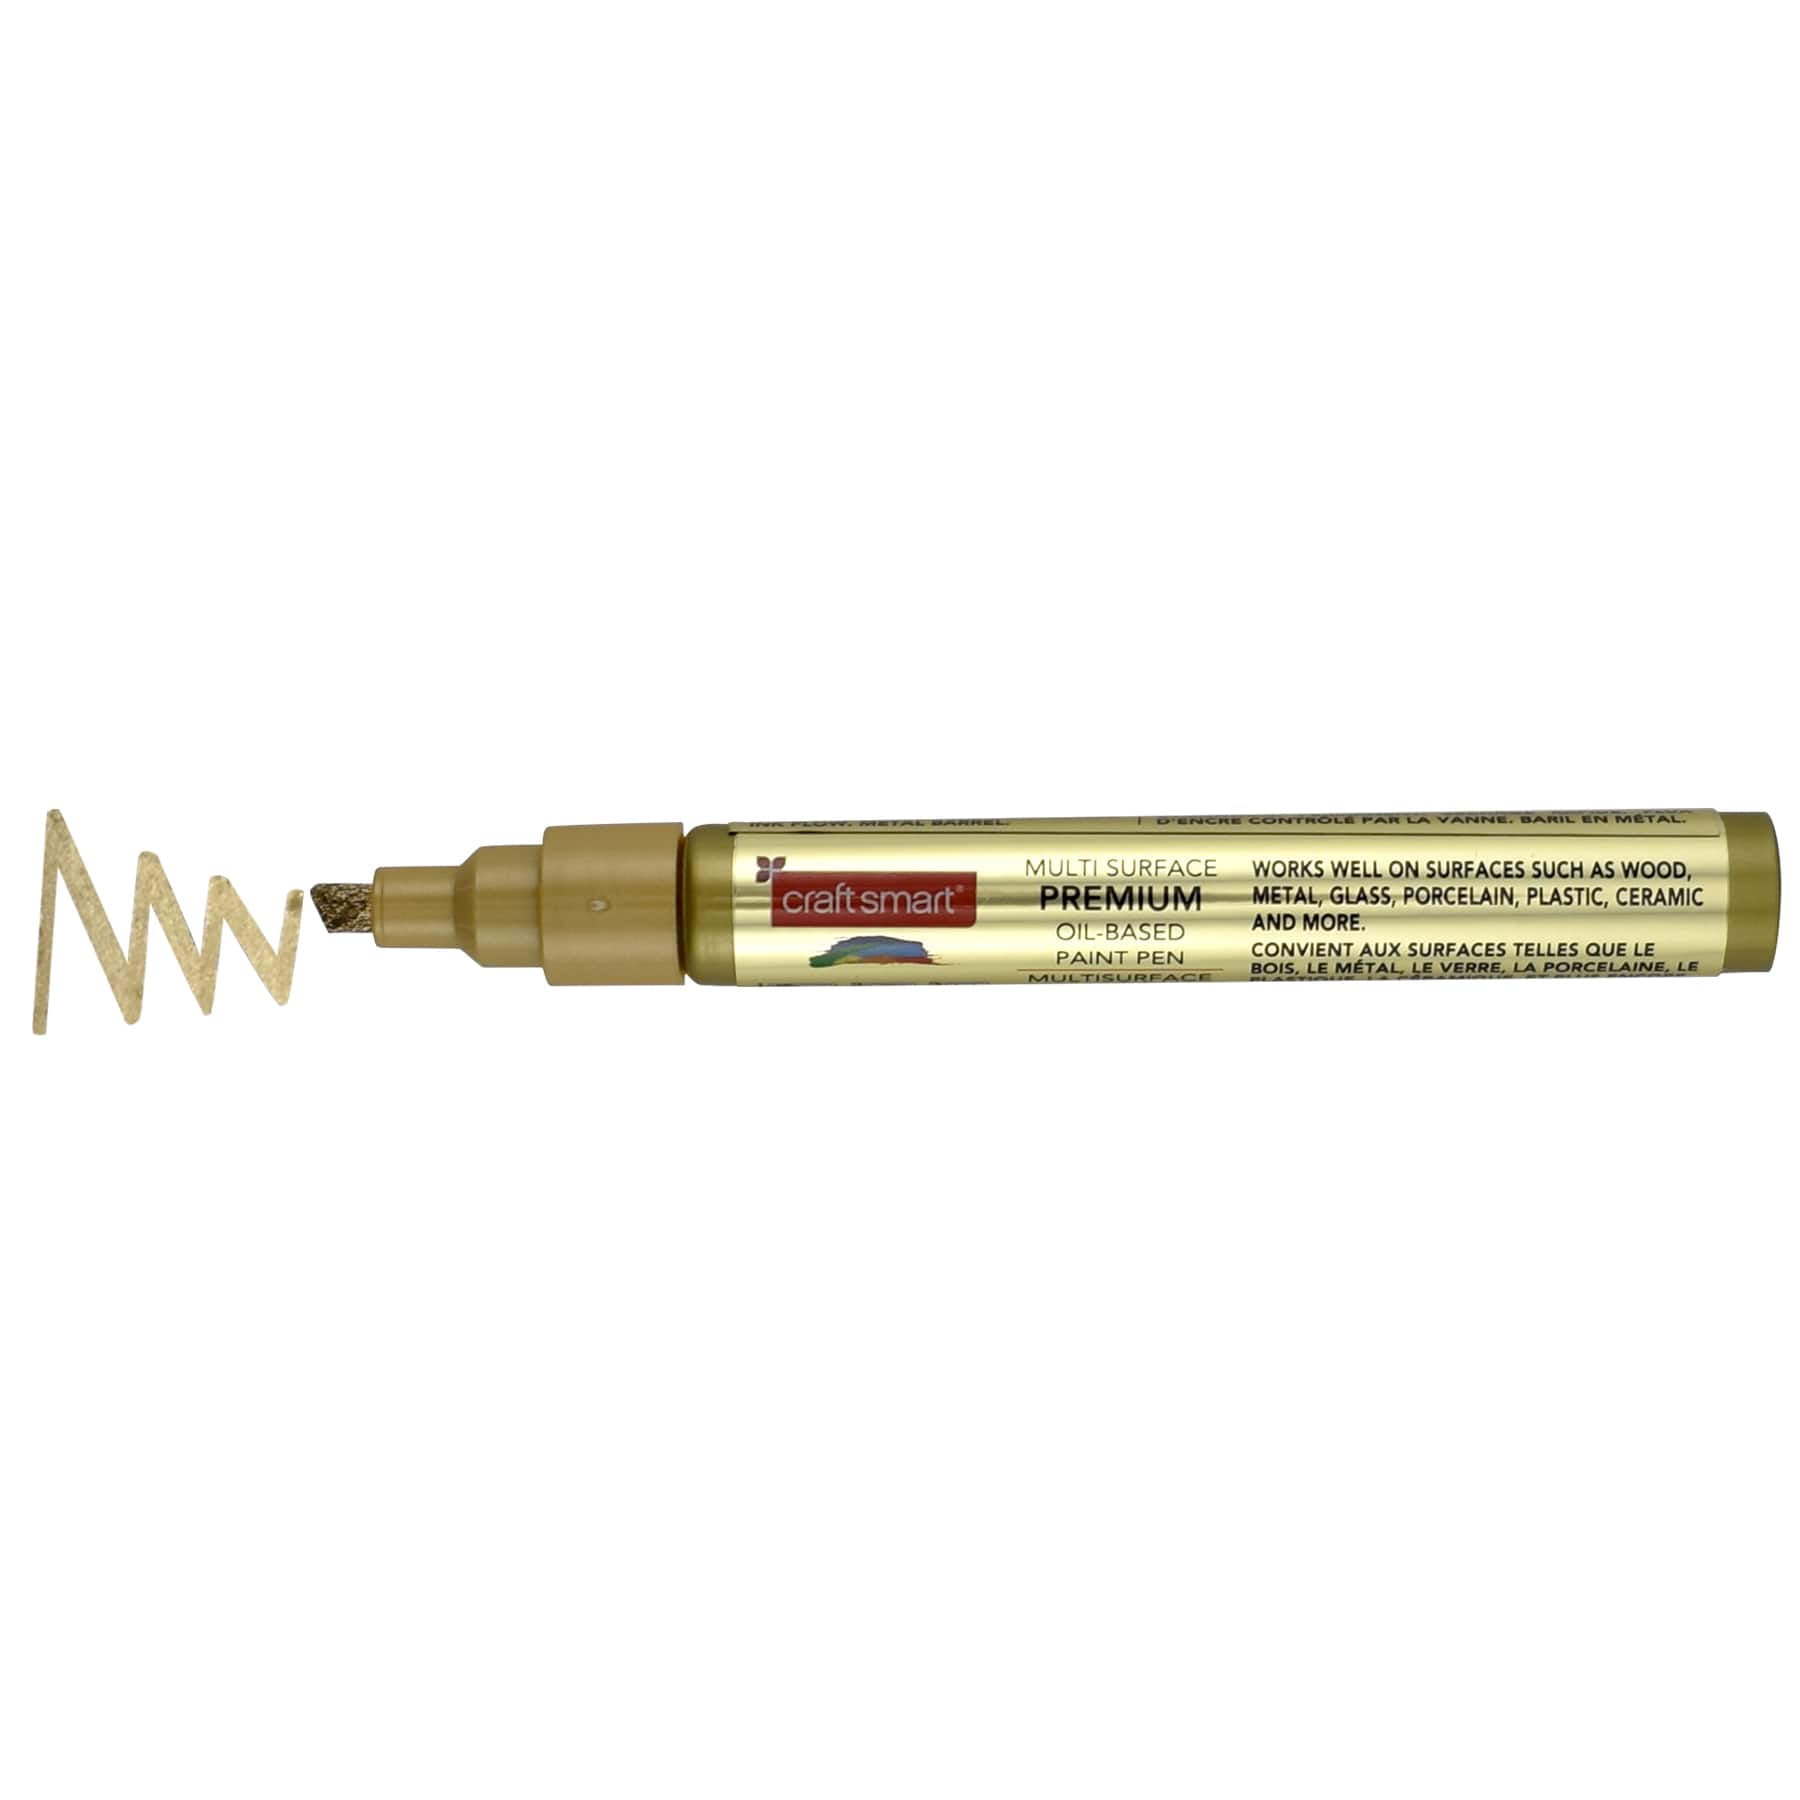 Metallic Fine Tip Multi-Surface Premium Oil-Based Paint Pen by Craft Smart®